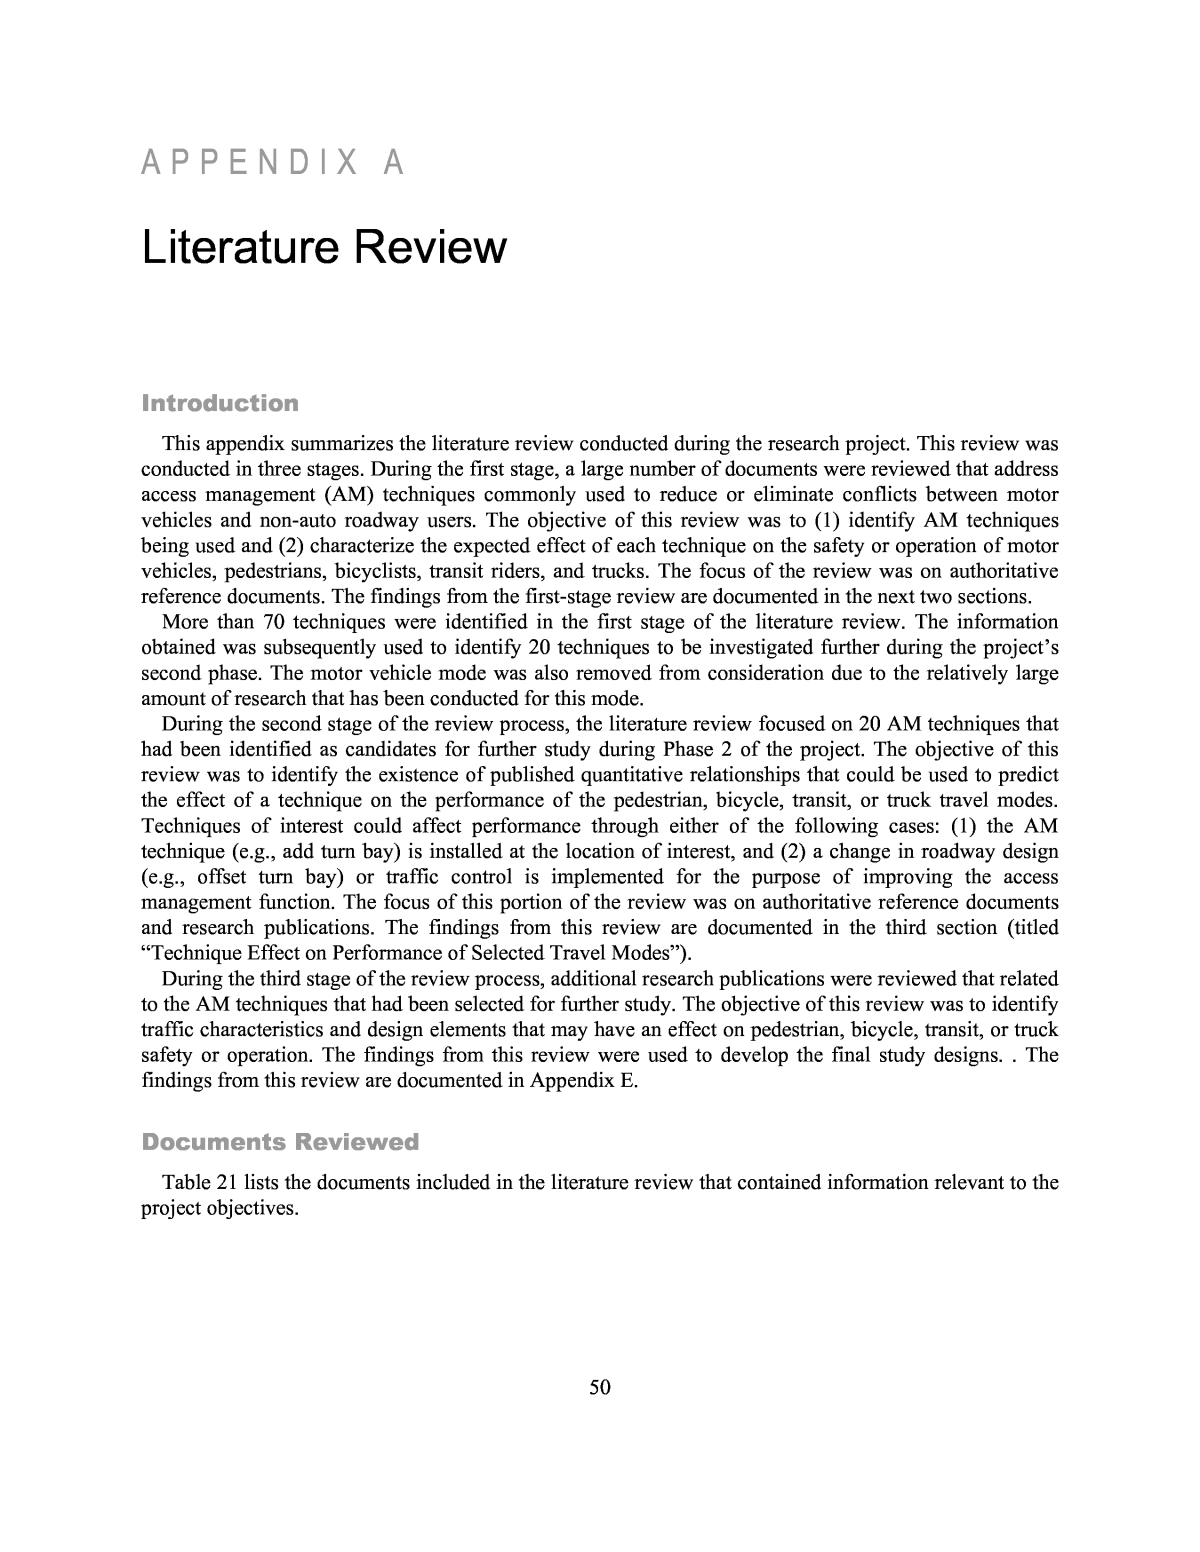 appendix in a literature review